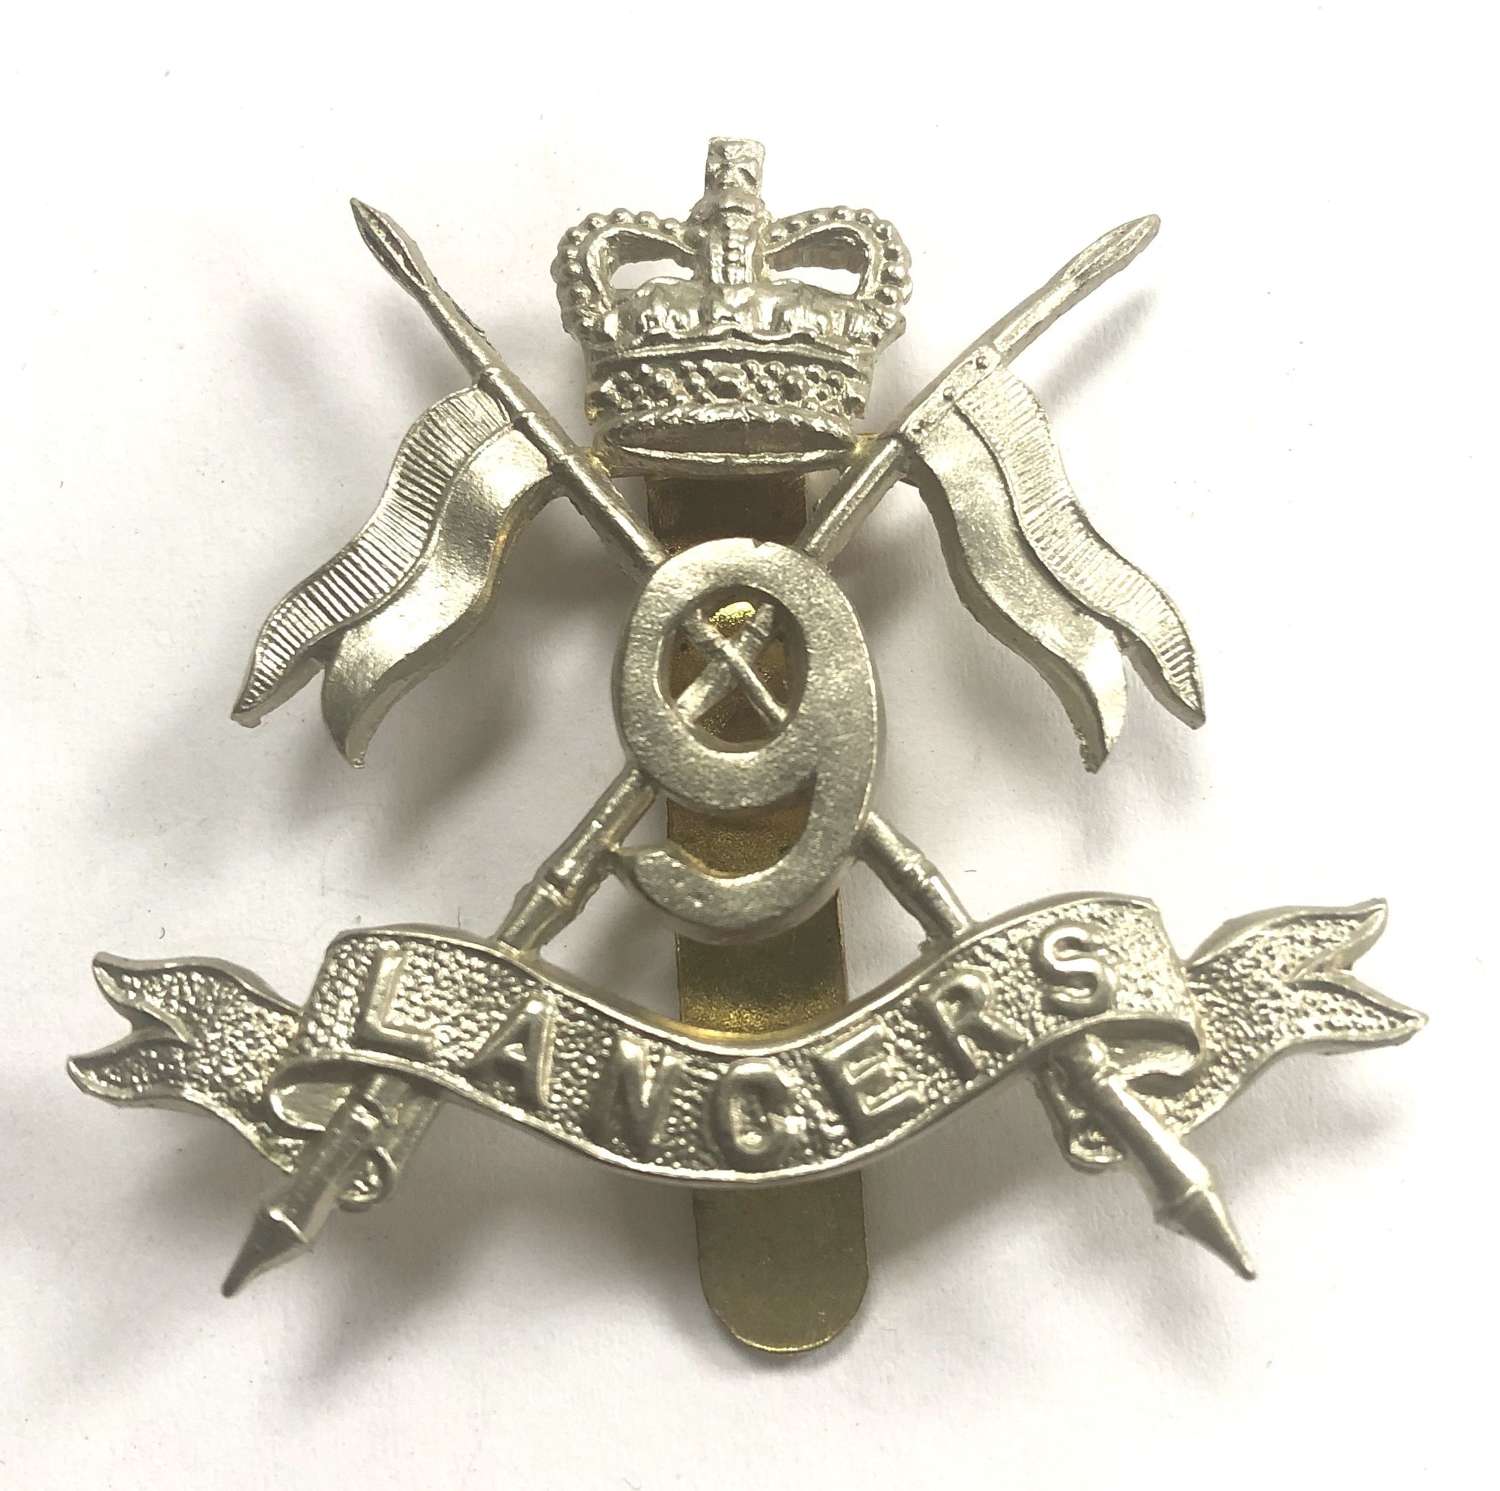 9th Queen's Royal Lancers EIIR cap badge circa 1953-60